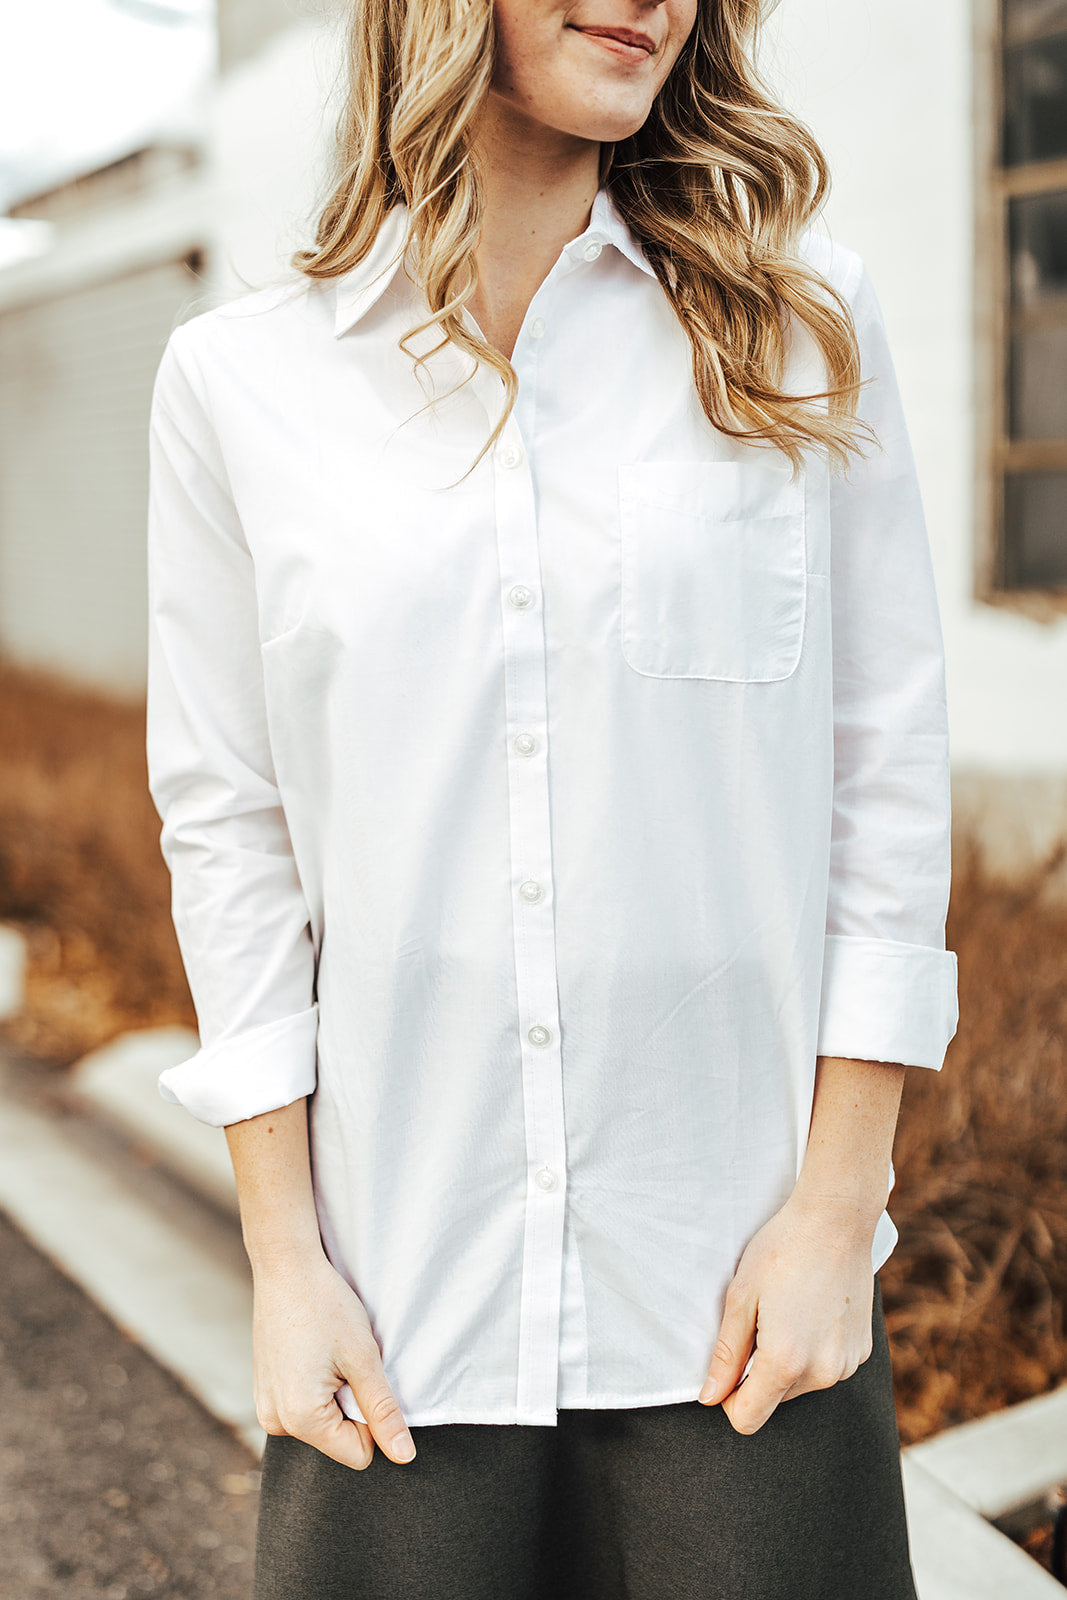 Ladies' Long Sleeve Dress Shirt White